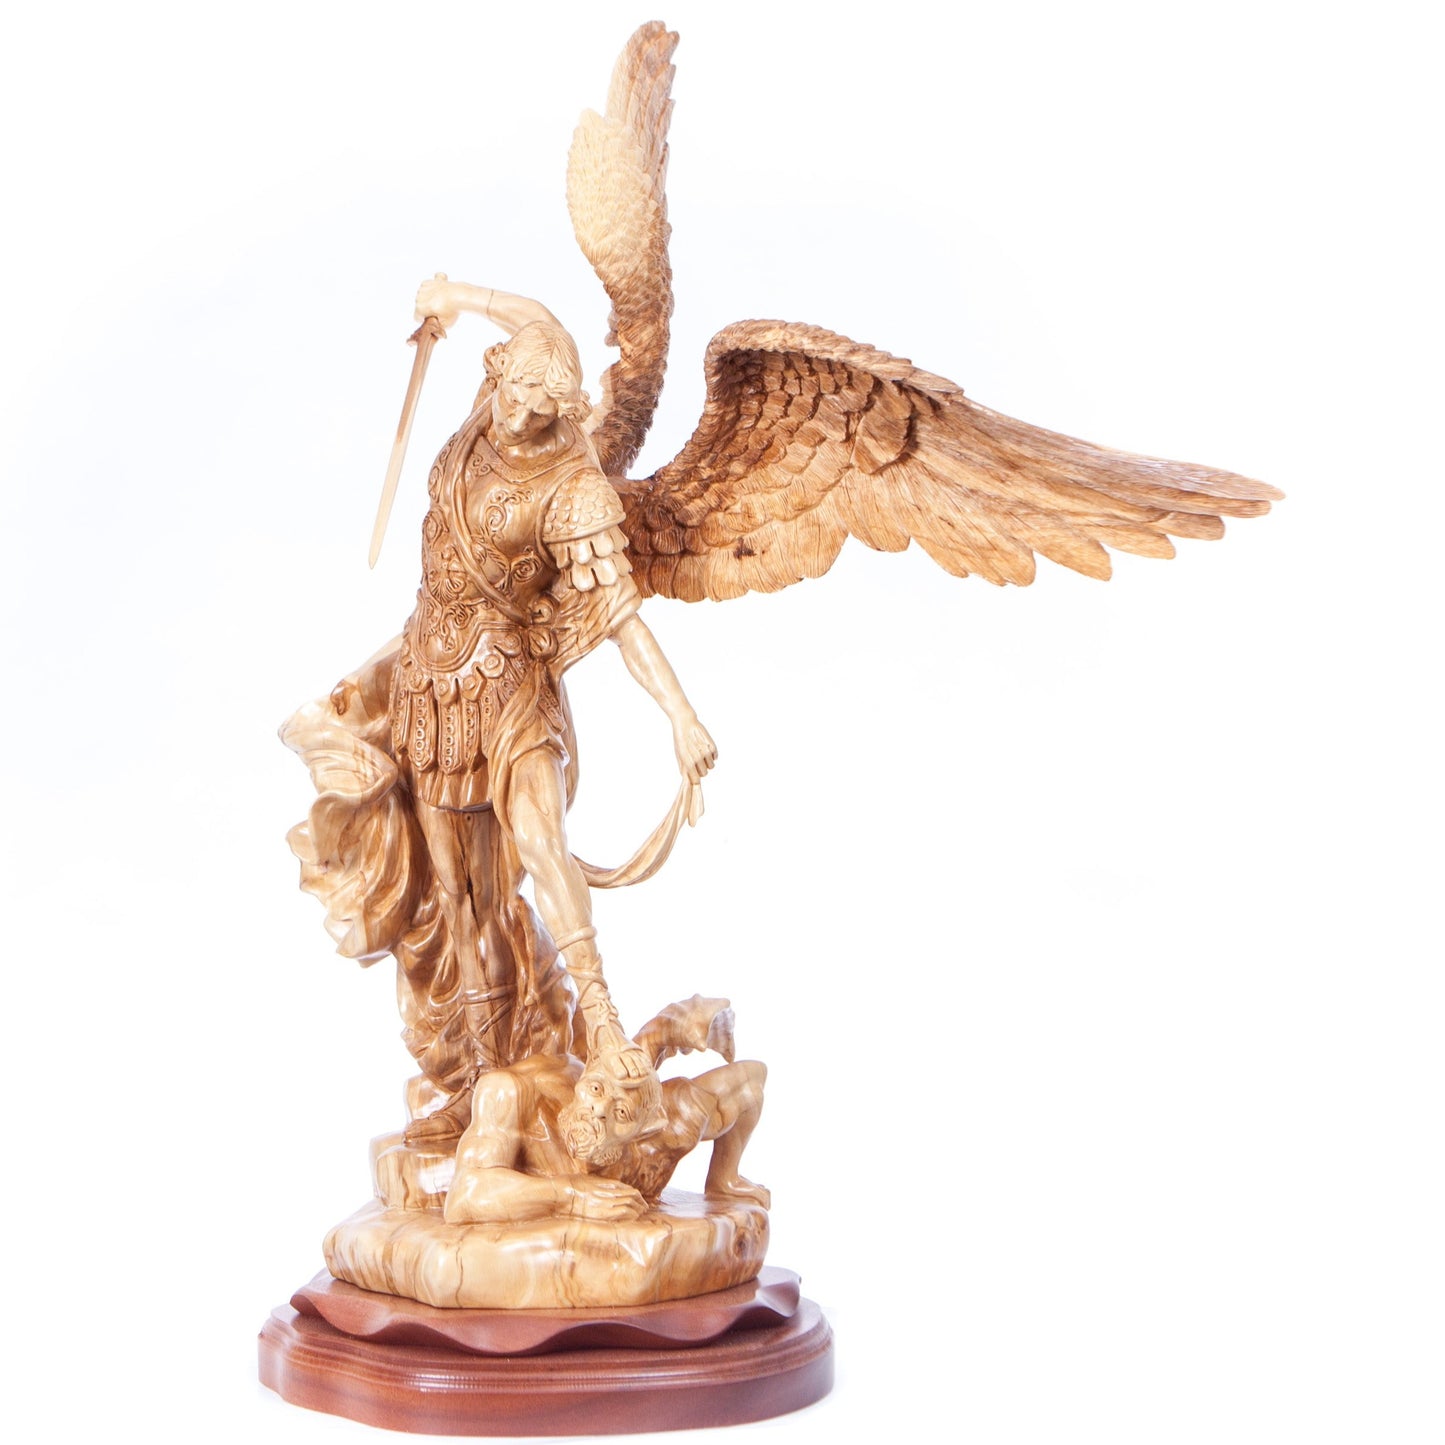 Archangel Michael Masterpiece, 32" Carved Wooden Sculpture